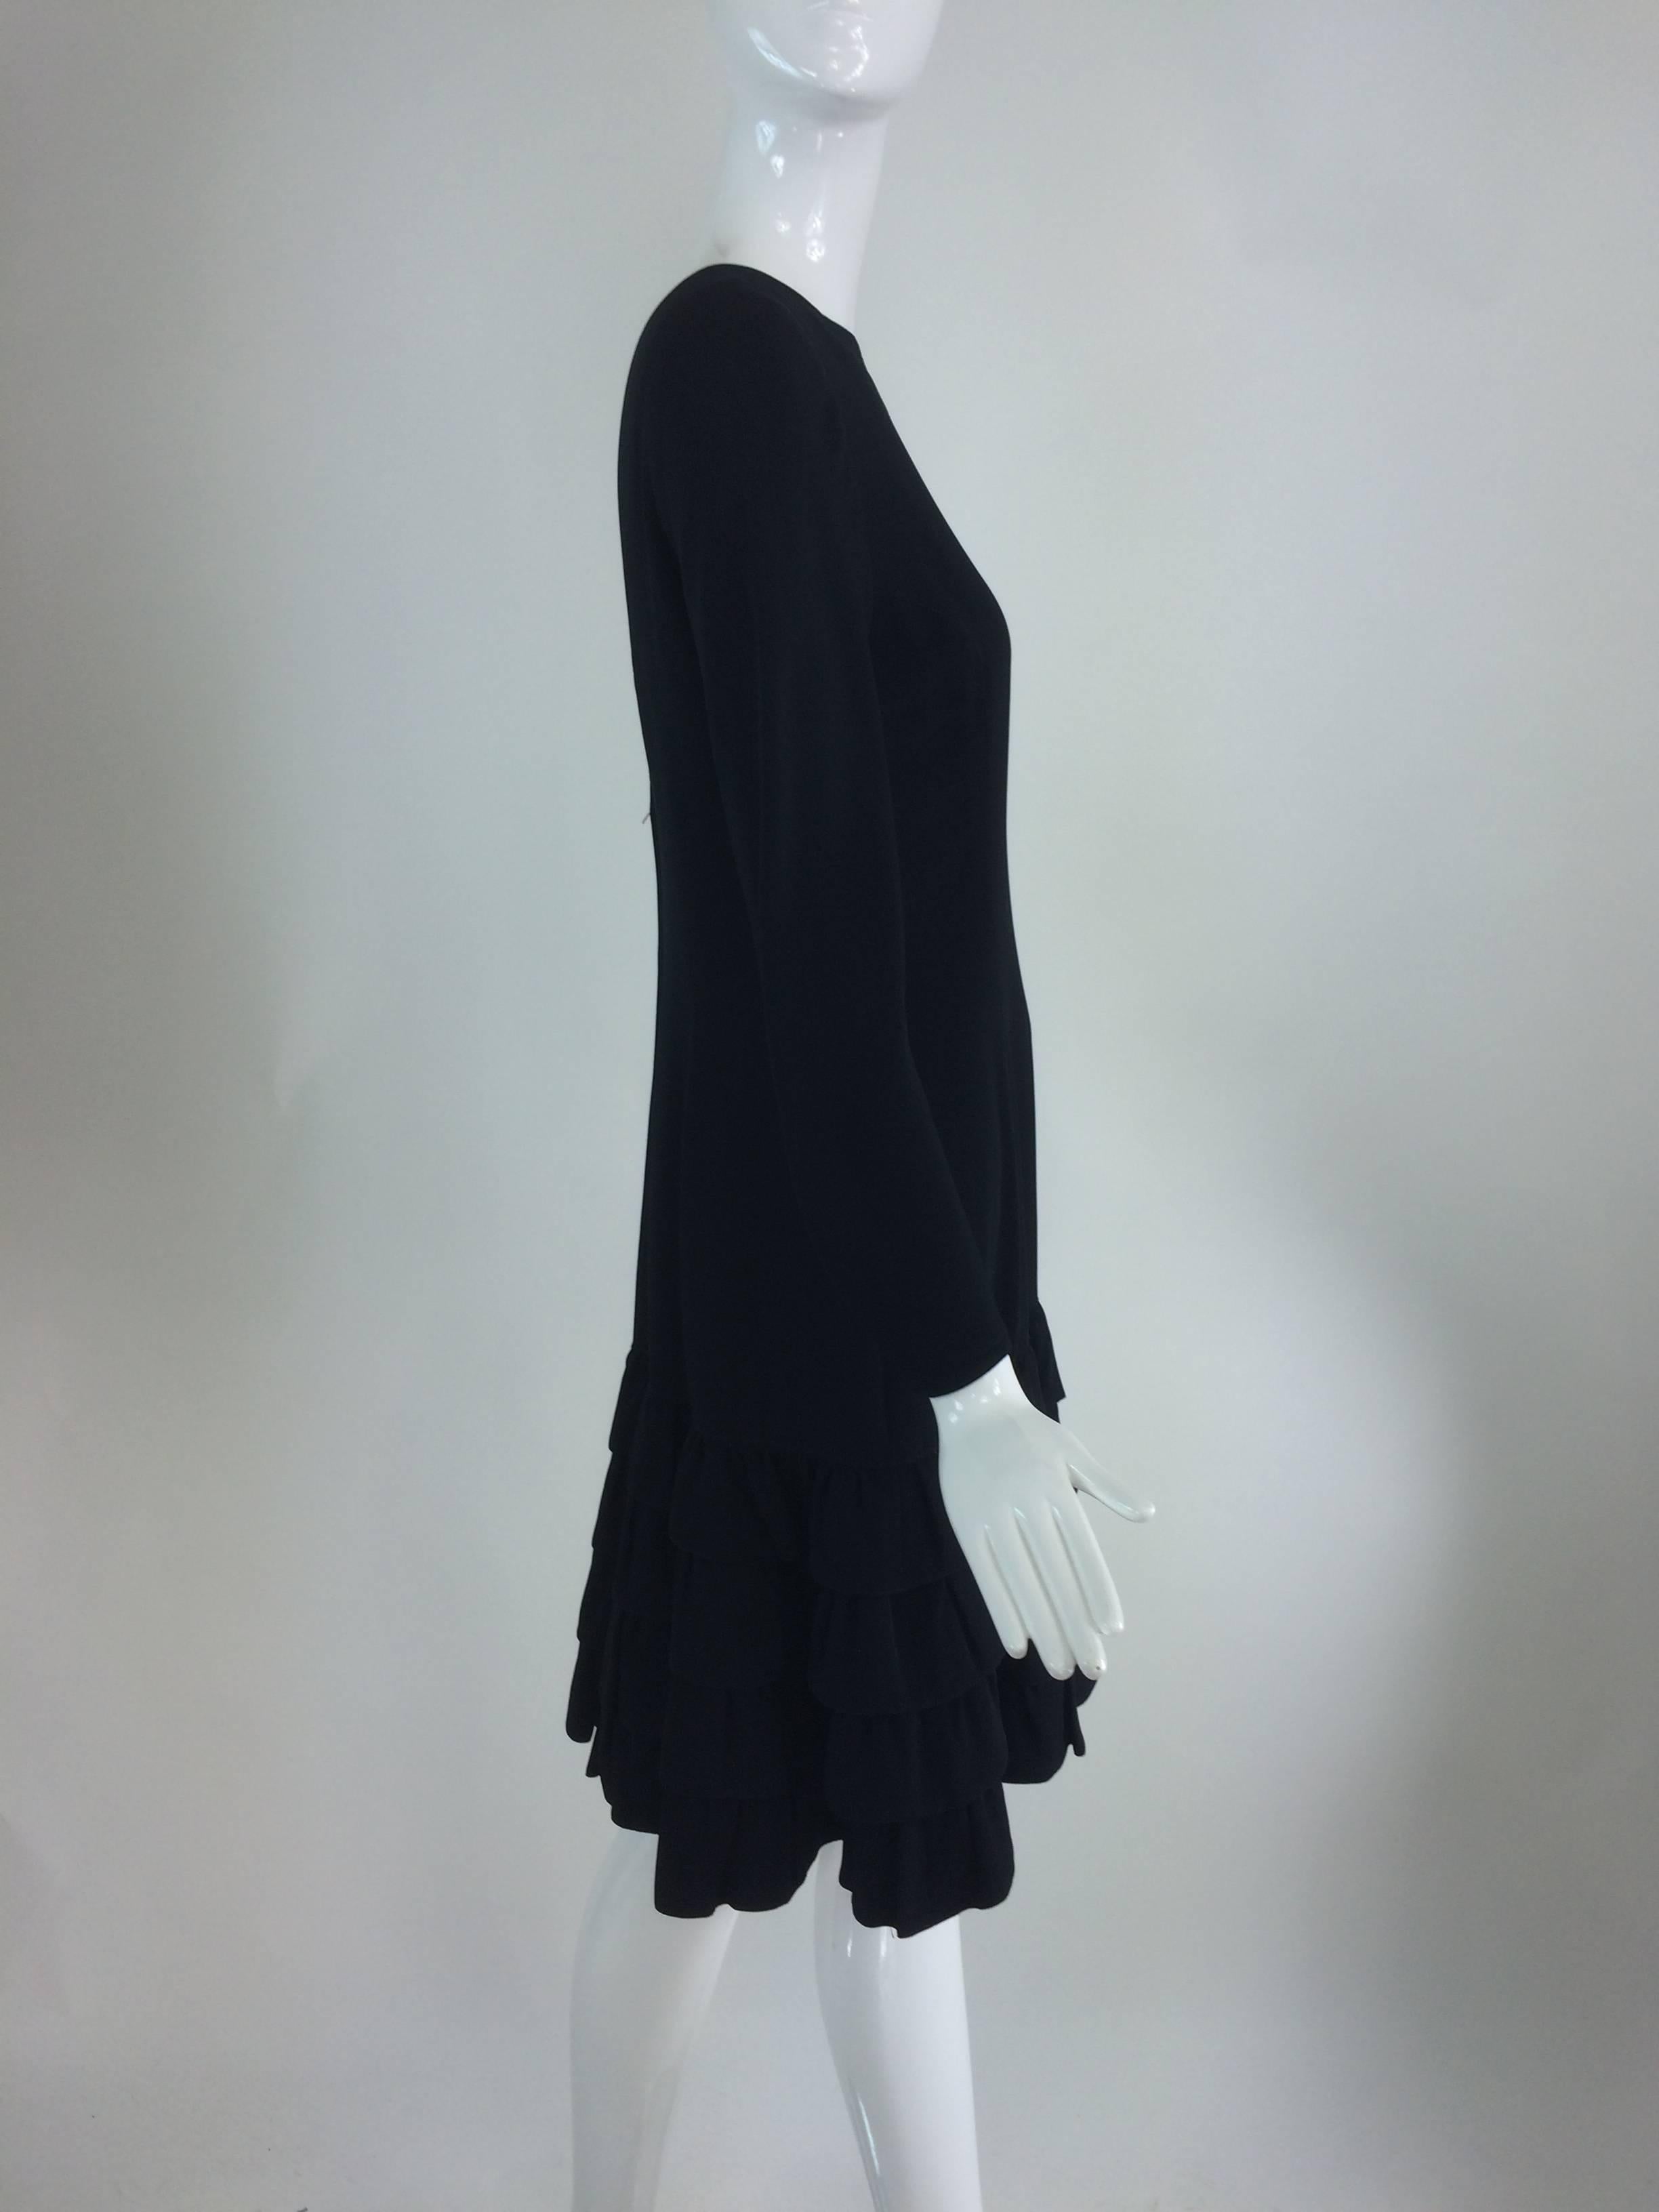 Women's Rifat Ozbek black gabardine dress with tiered ruffle hem 1980s